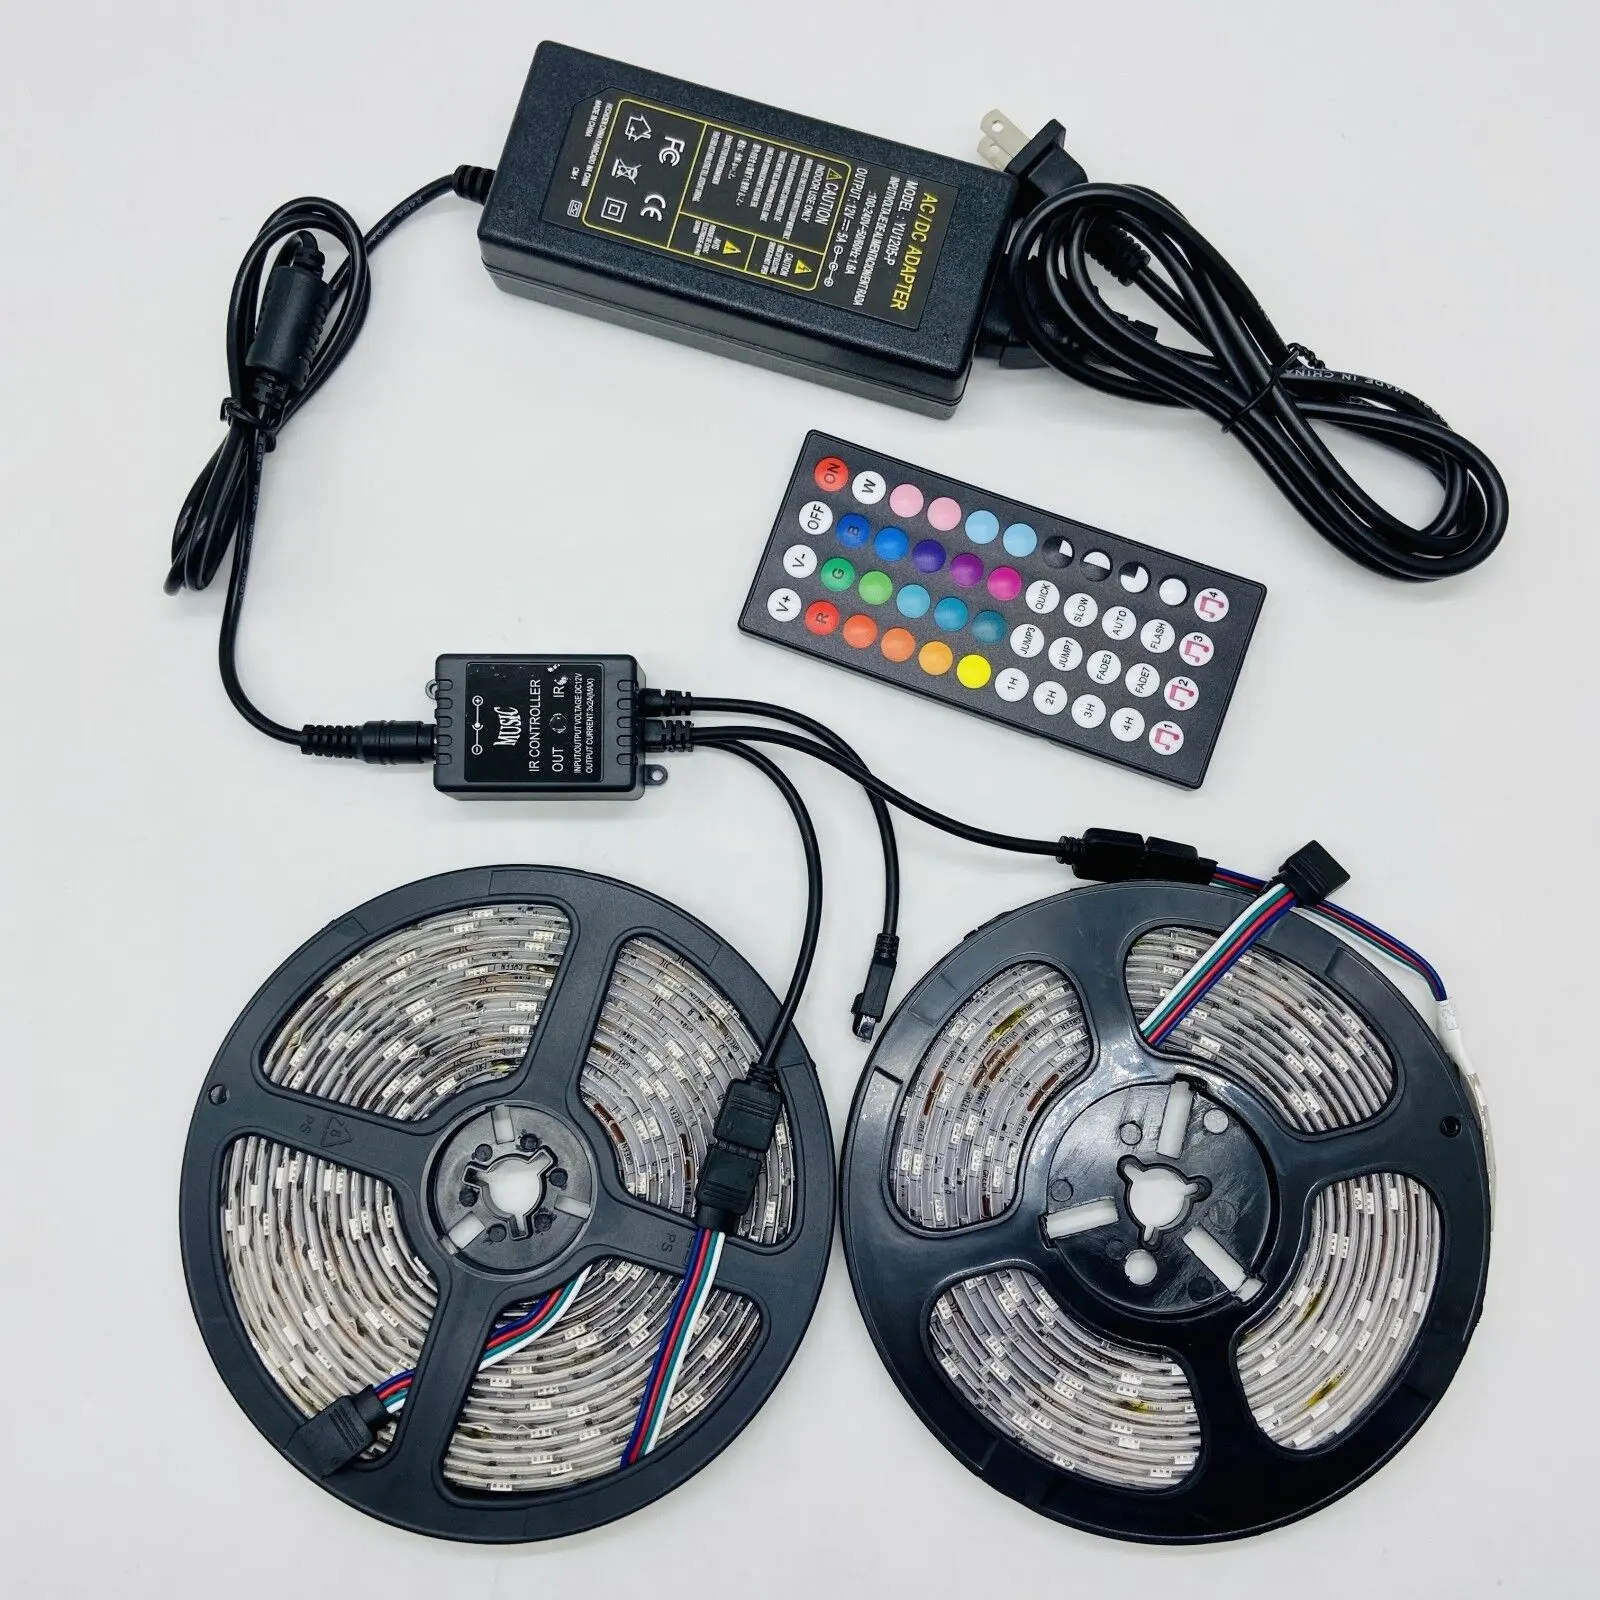 44 Keys Music Voice Sensor Controller Sound IR Remote Control RGB 10M 3528 5050 LED Strip light RGB Controllers